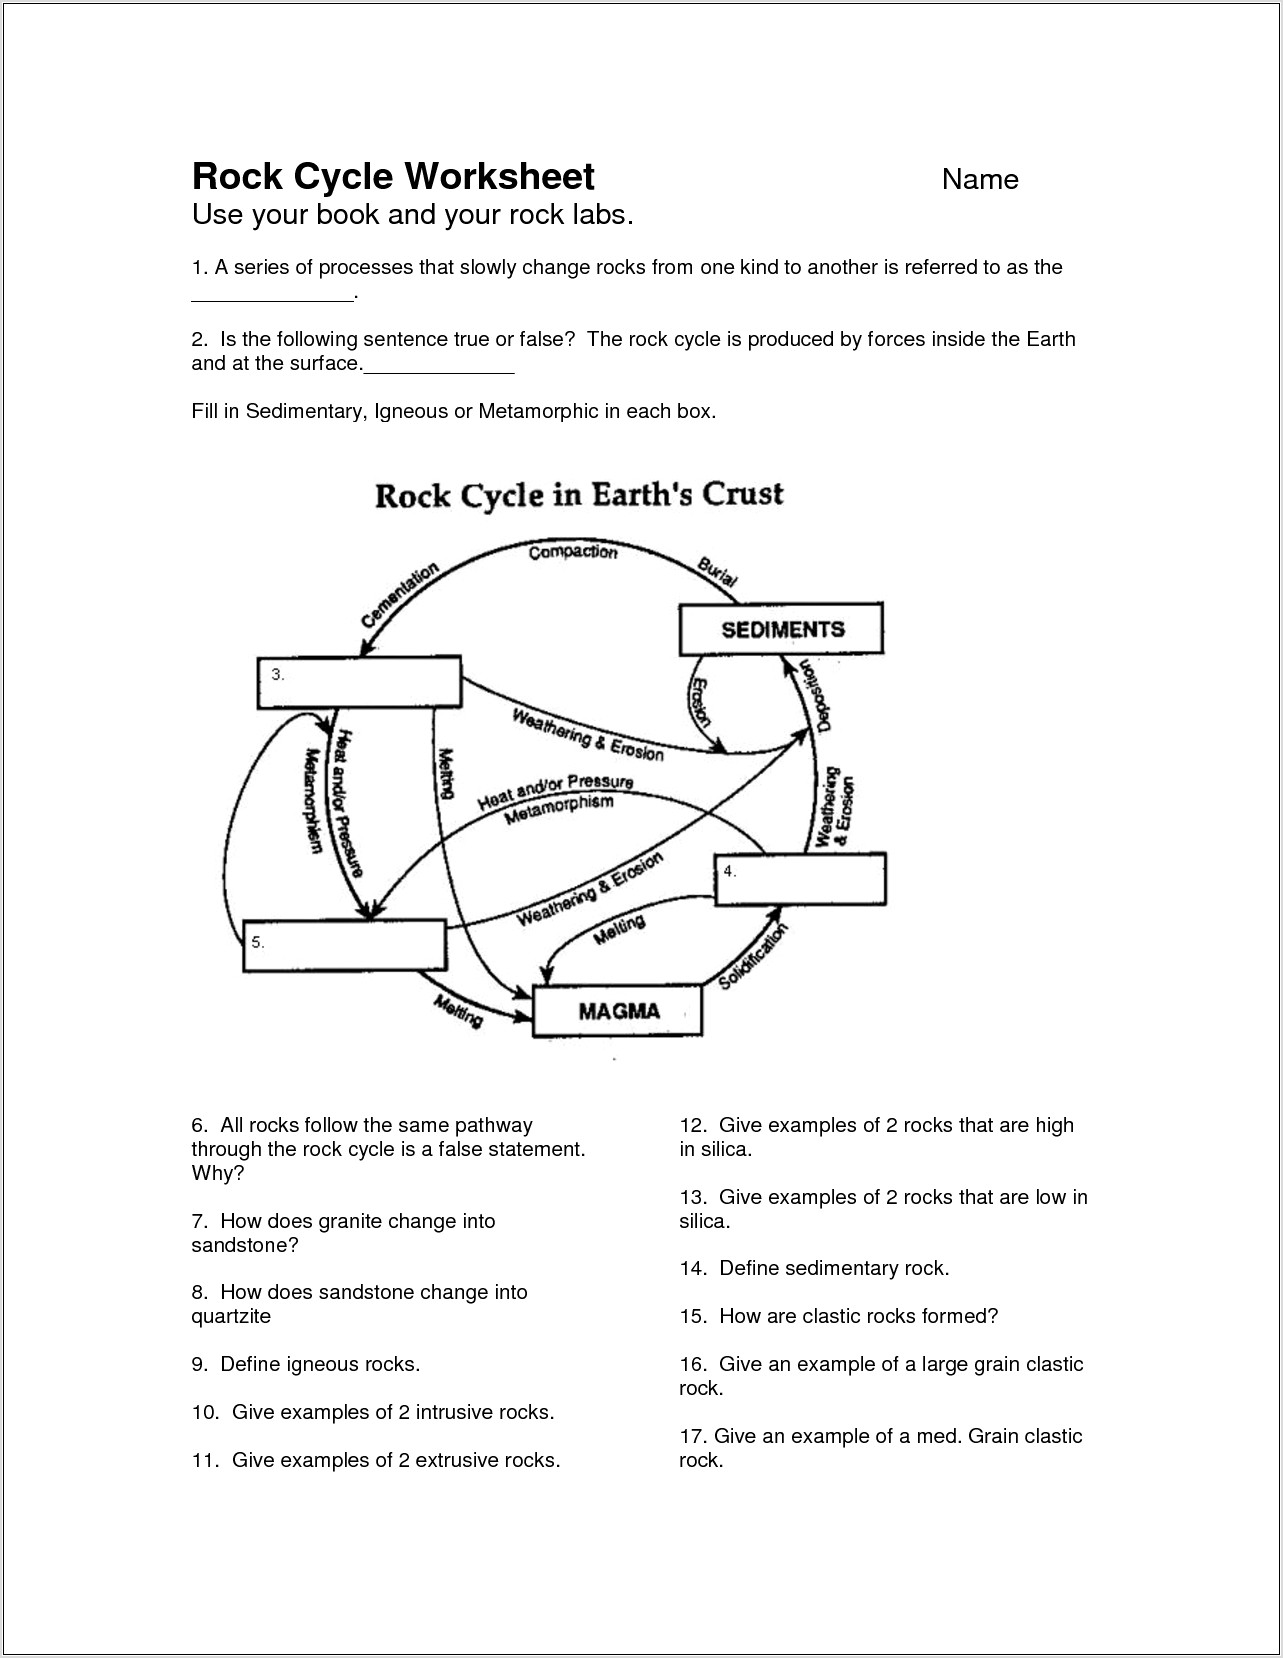 rock-cycle-worksheet-label-the-diagram-worksheet-restiumani-resume